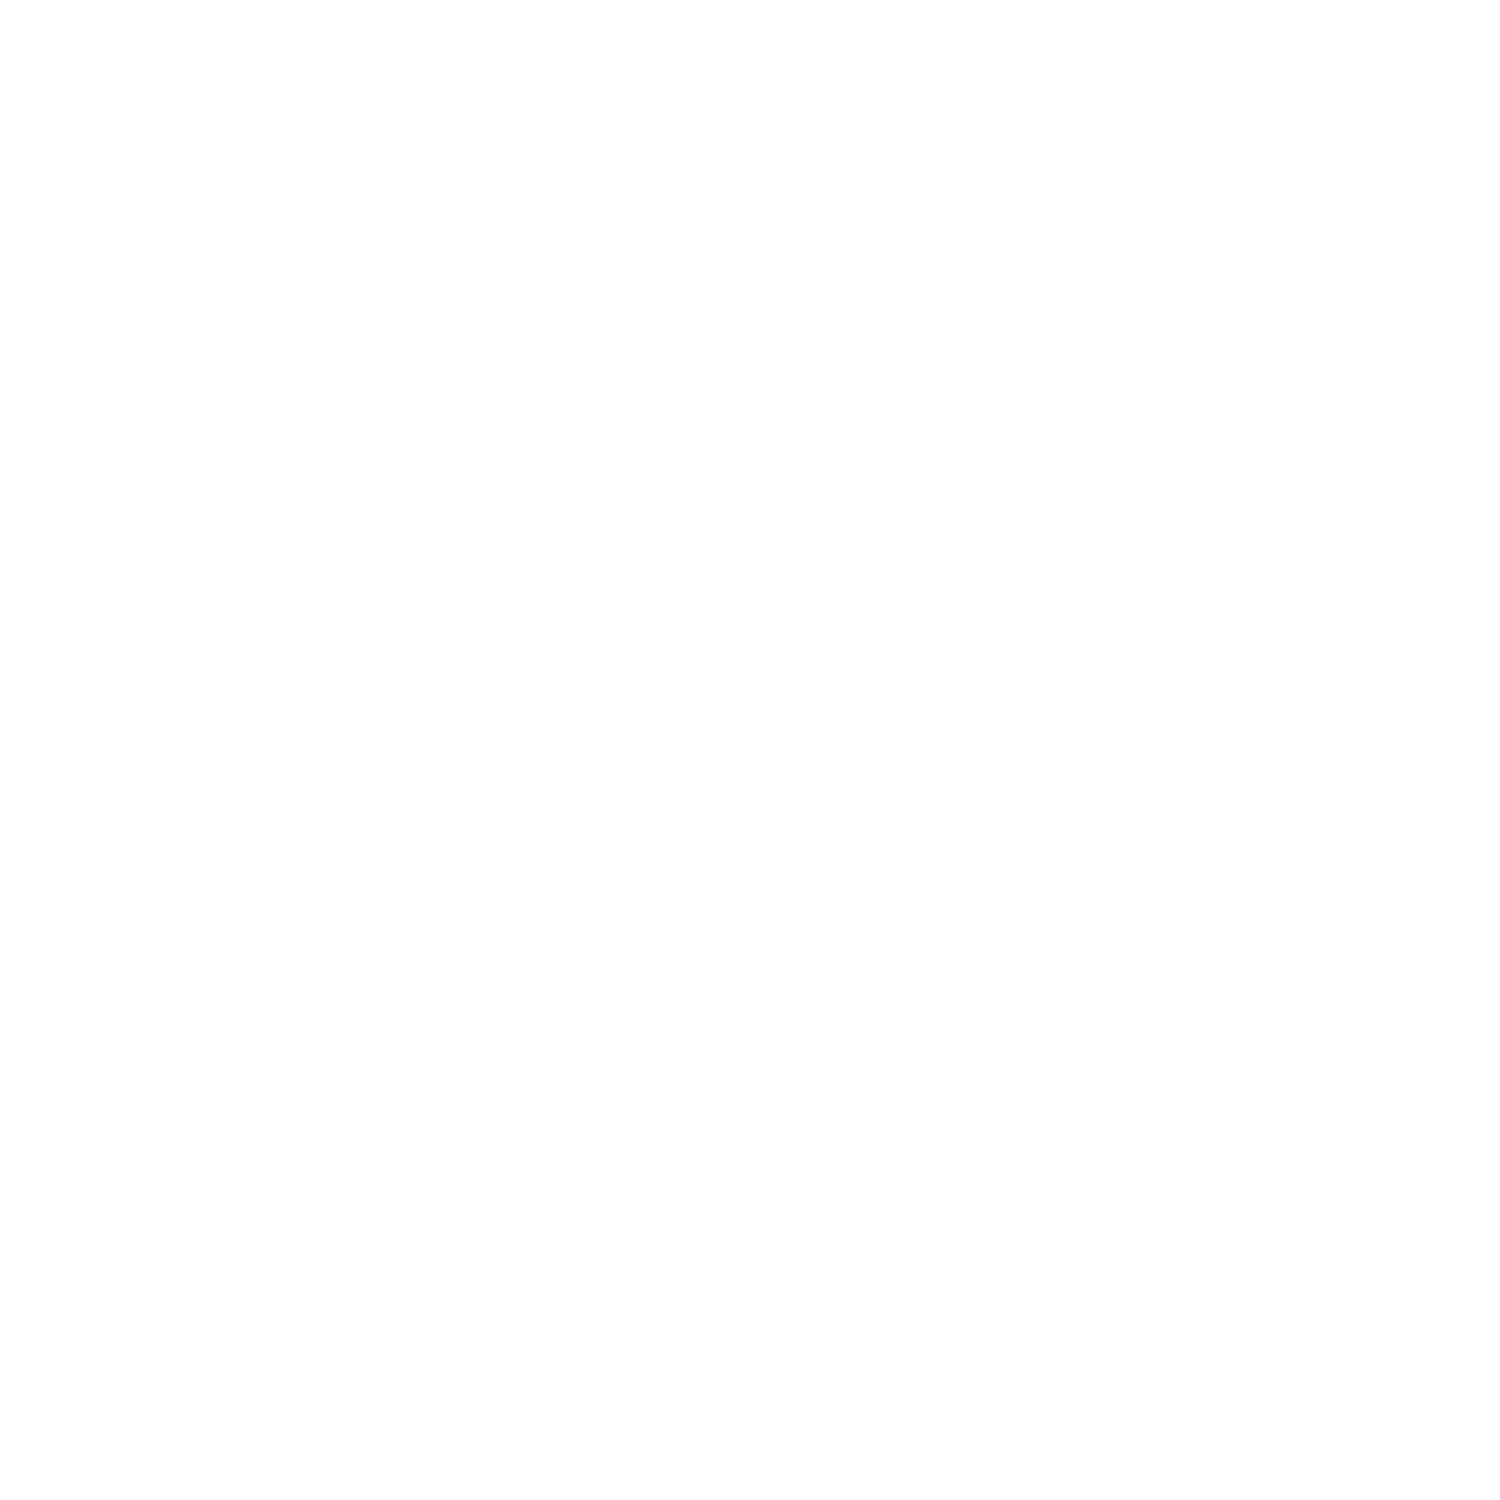                   Chabad of Aspen Hill